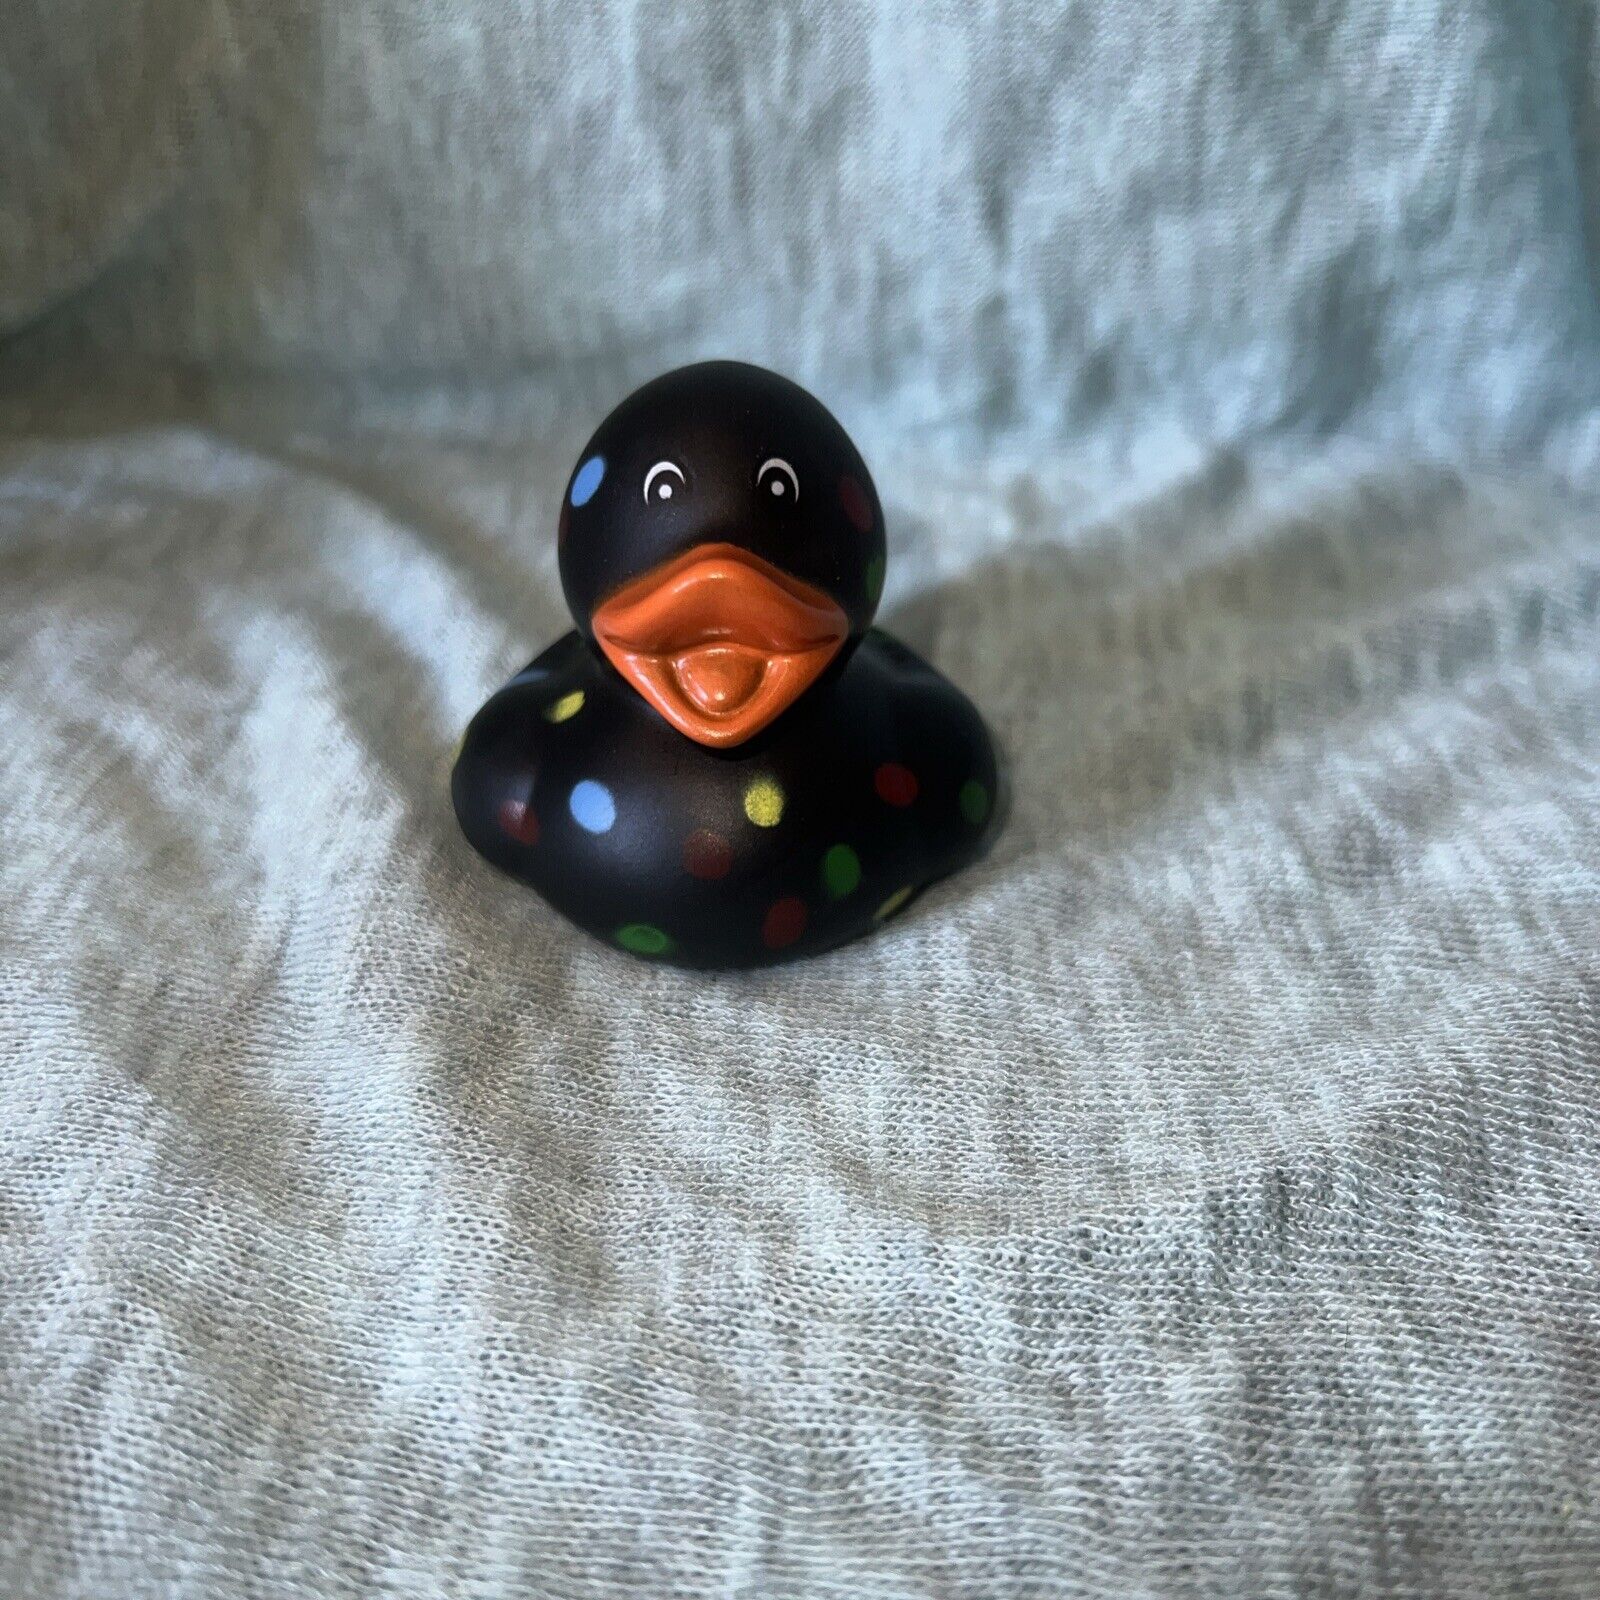 Black 2” Polkadot Rubber Duck, Jeep Ducking